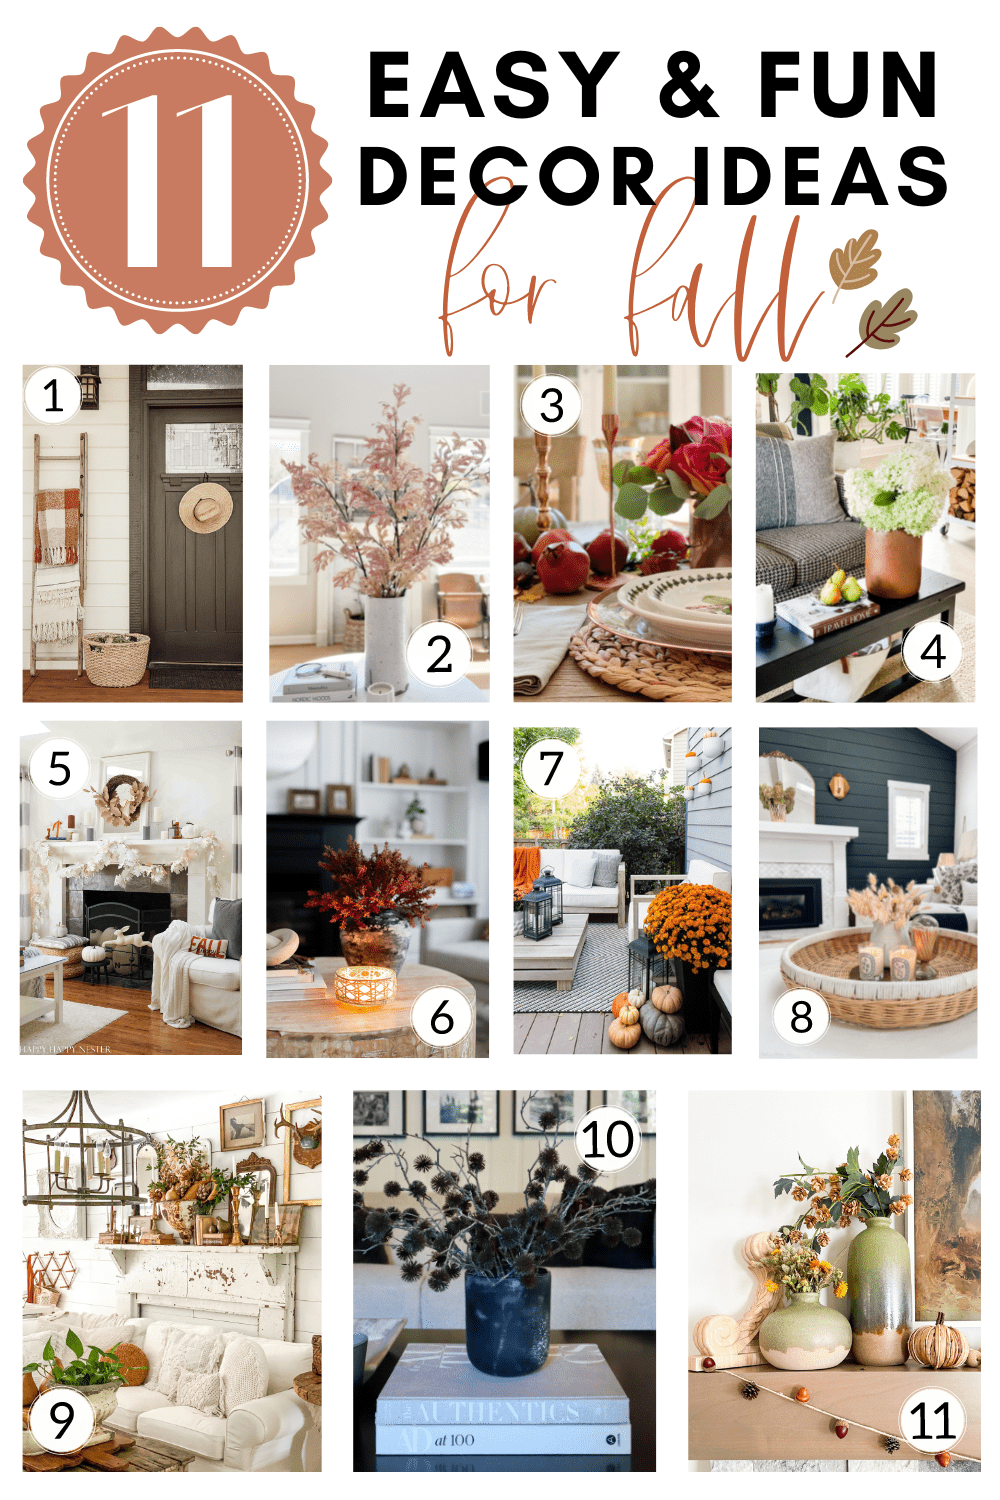 11 easy and fun decor ideas for fall! 